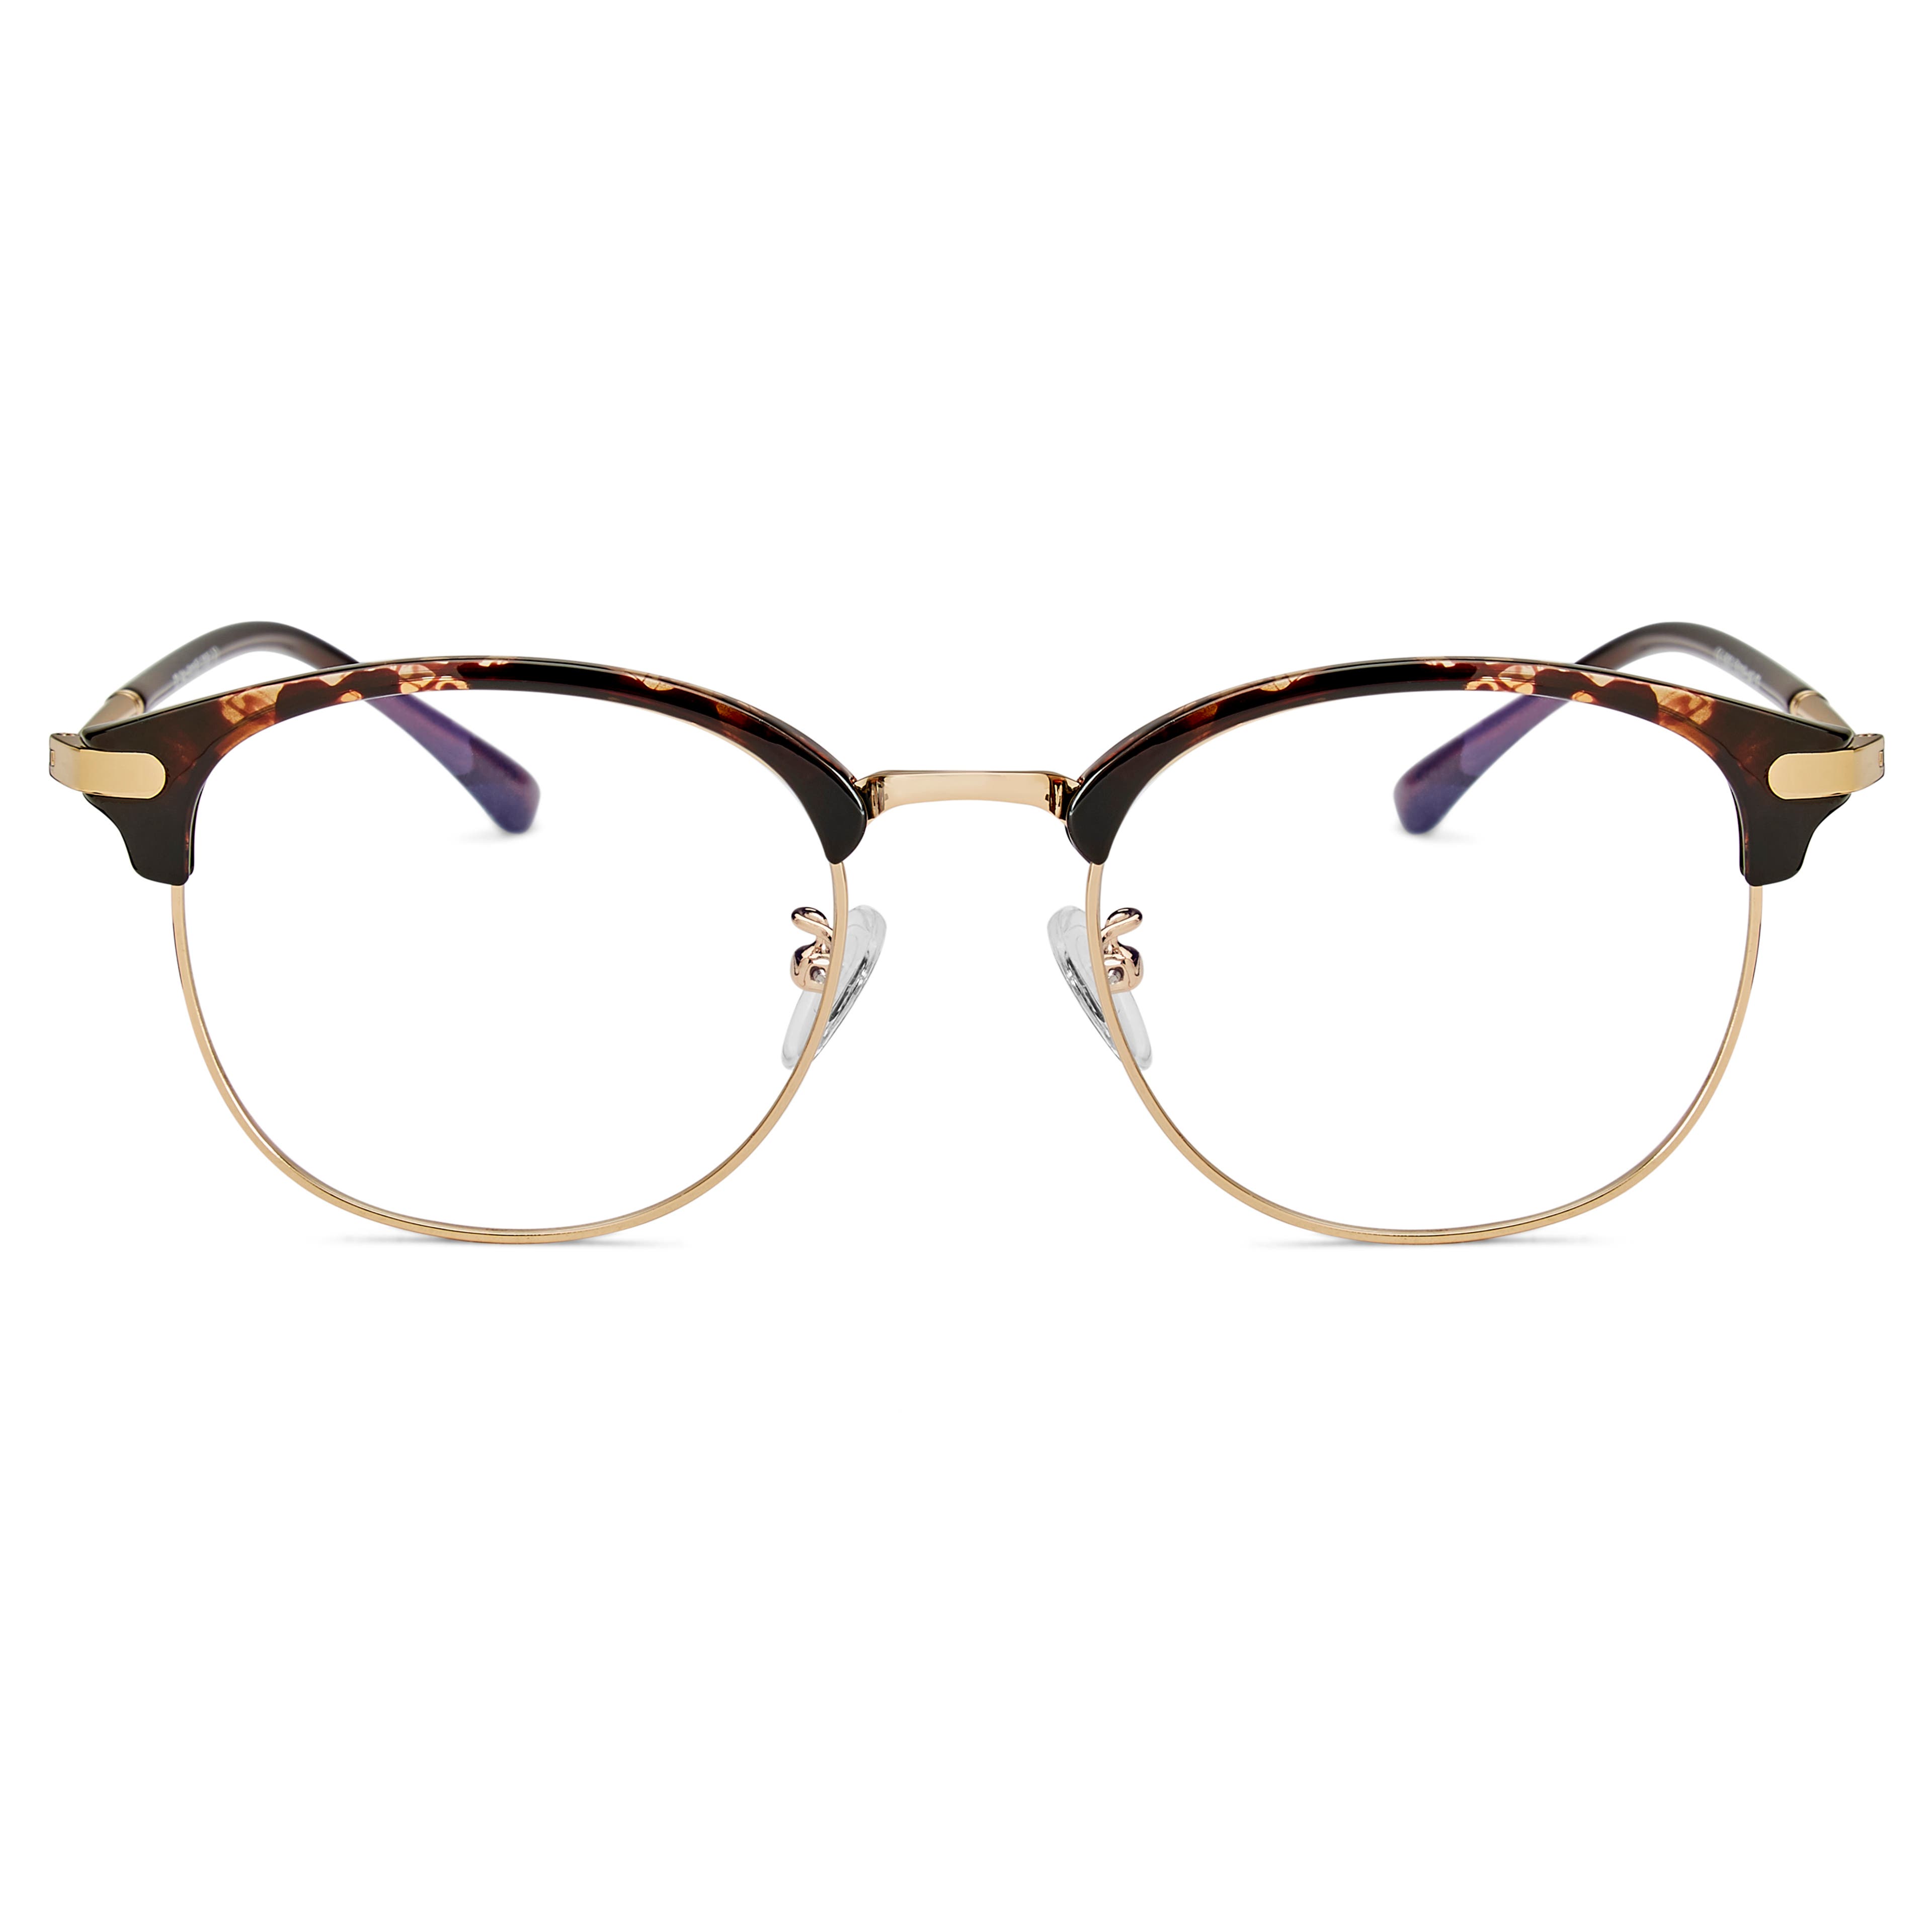 Tortoise Shell & Gold-Tone Classroom Clear Lens Glasses